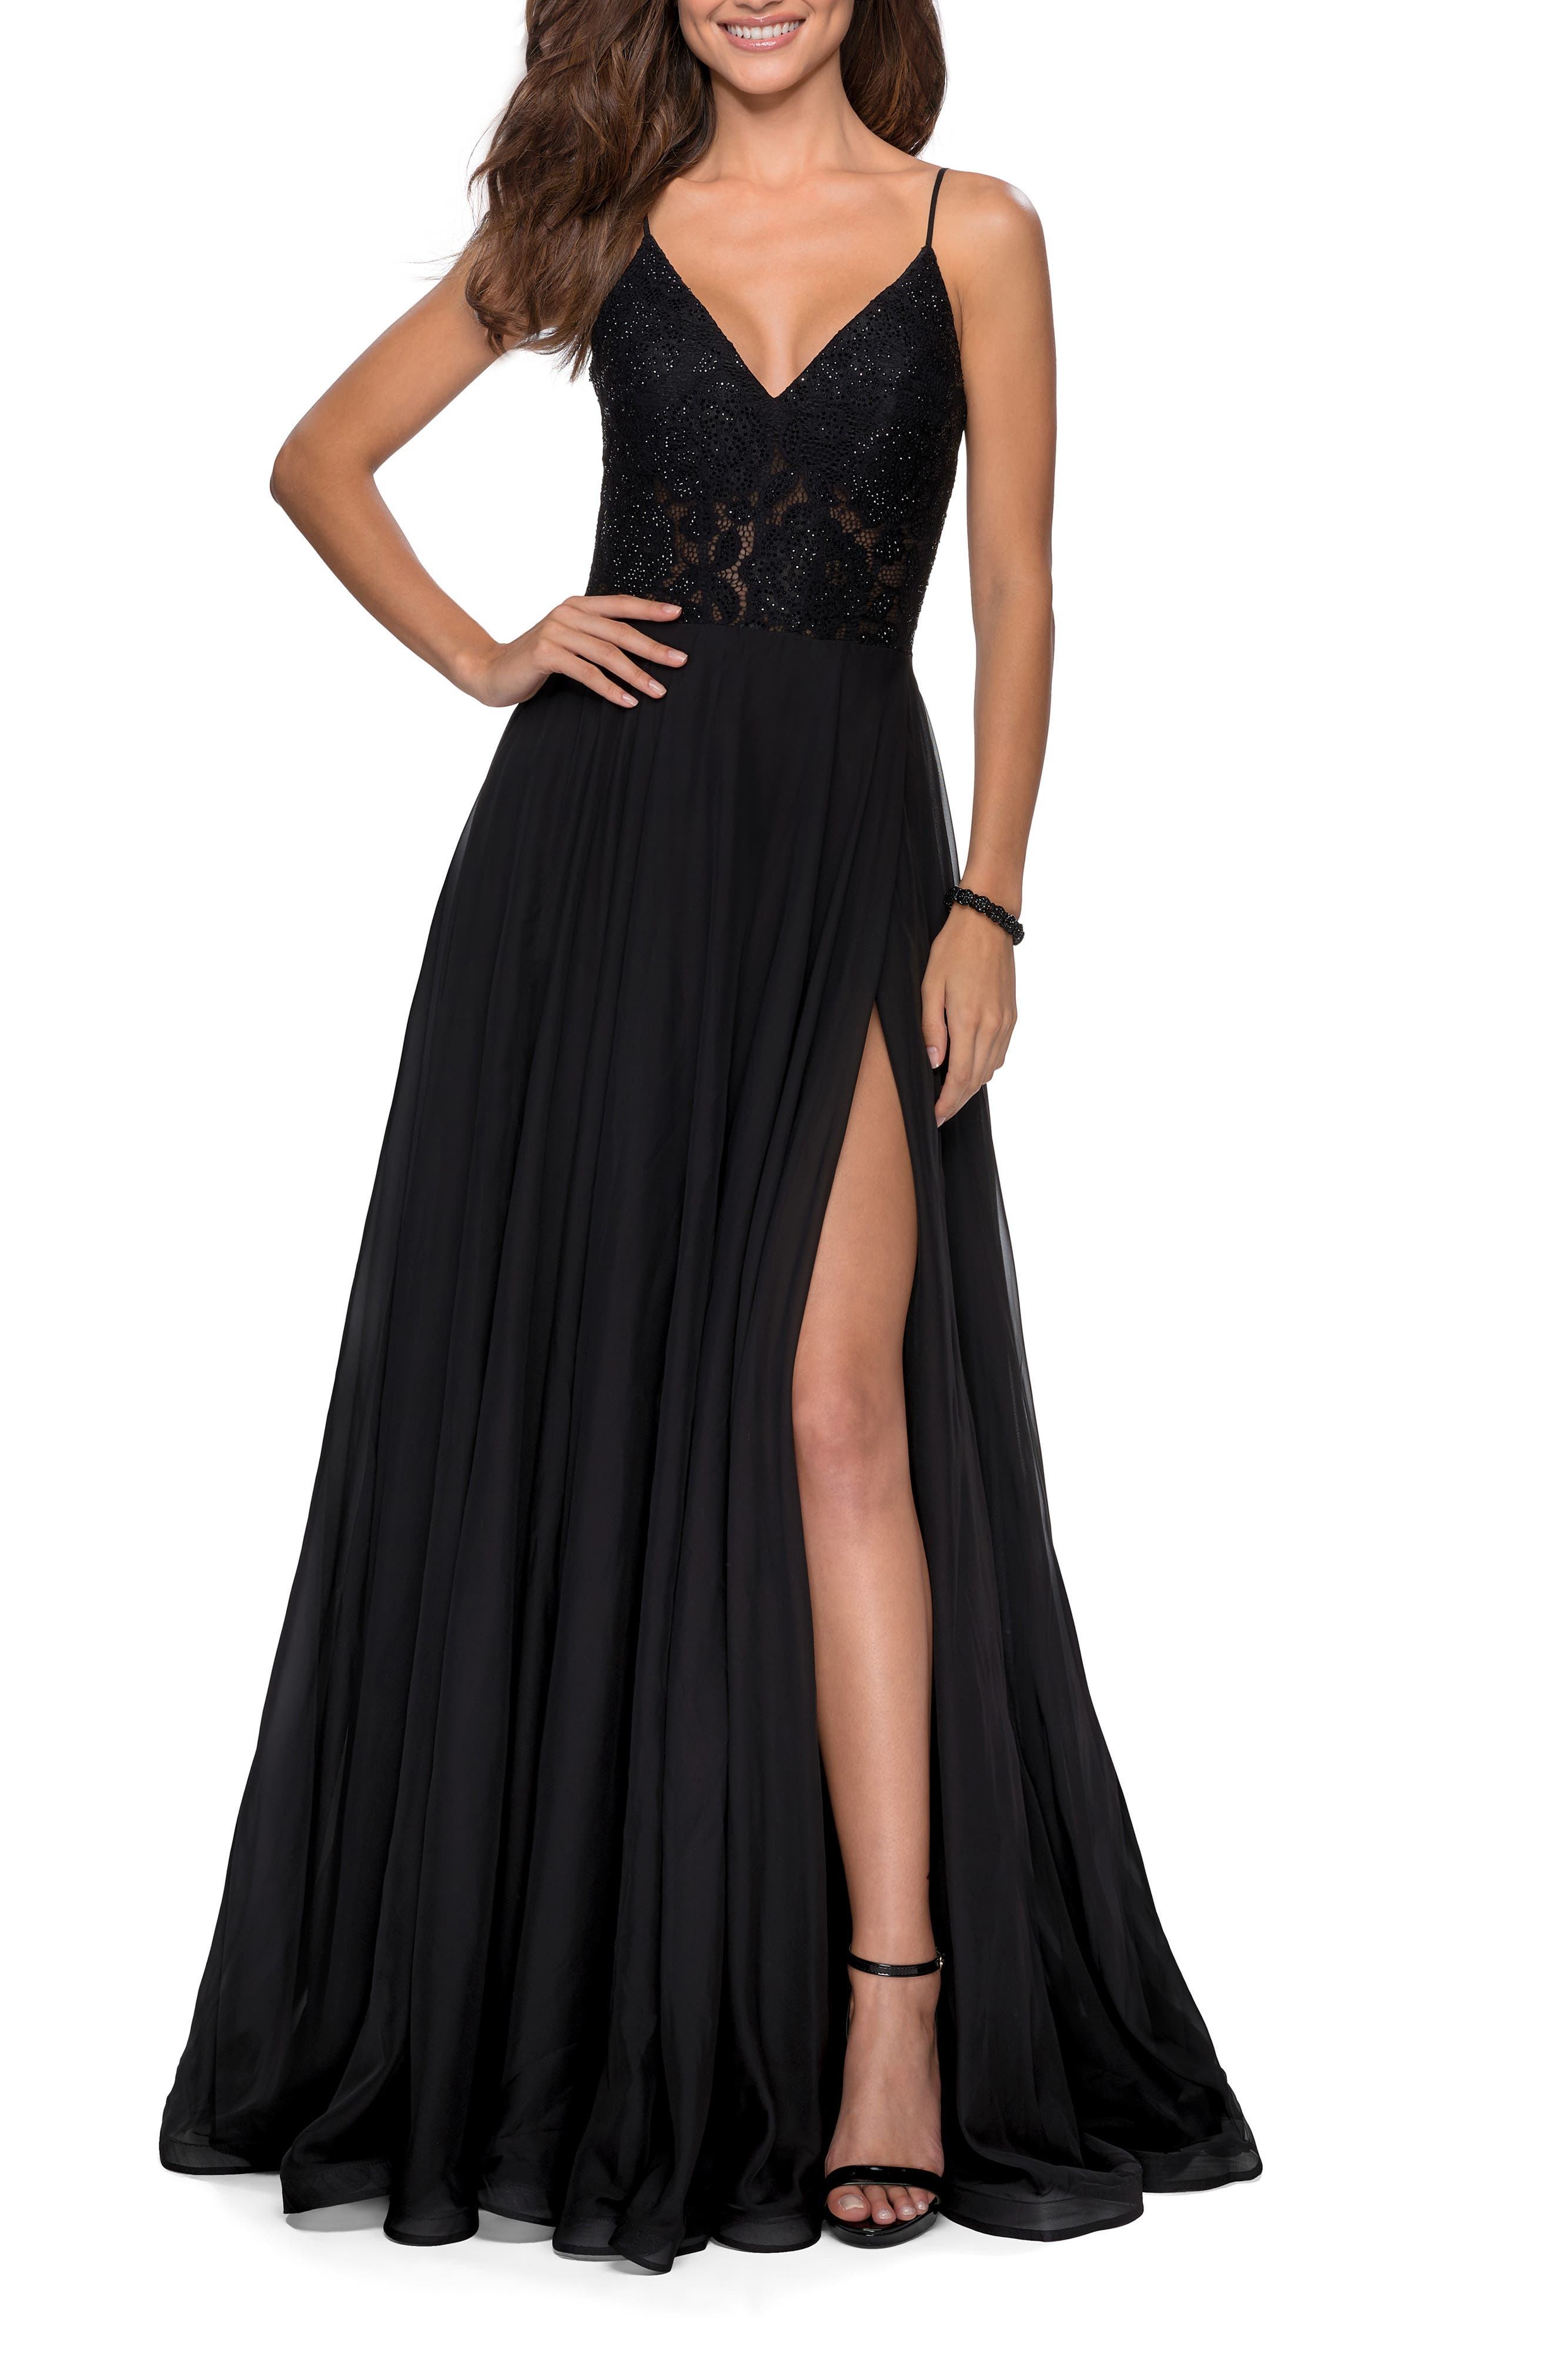 Women's Black Formal Dresses ☀ Evening ...